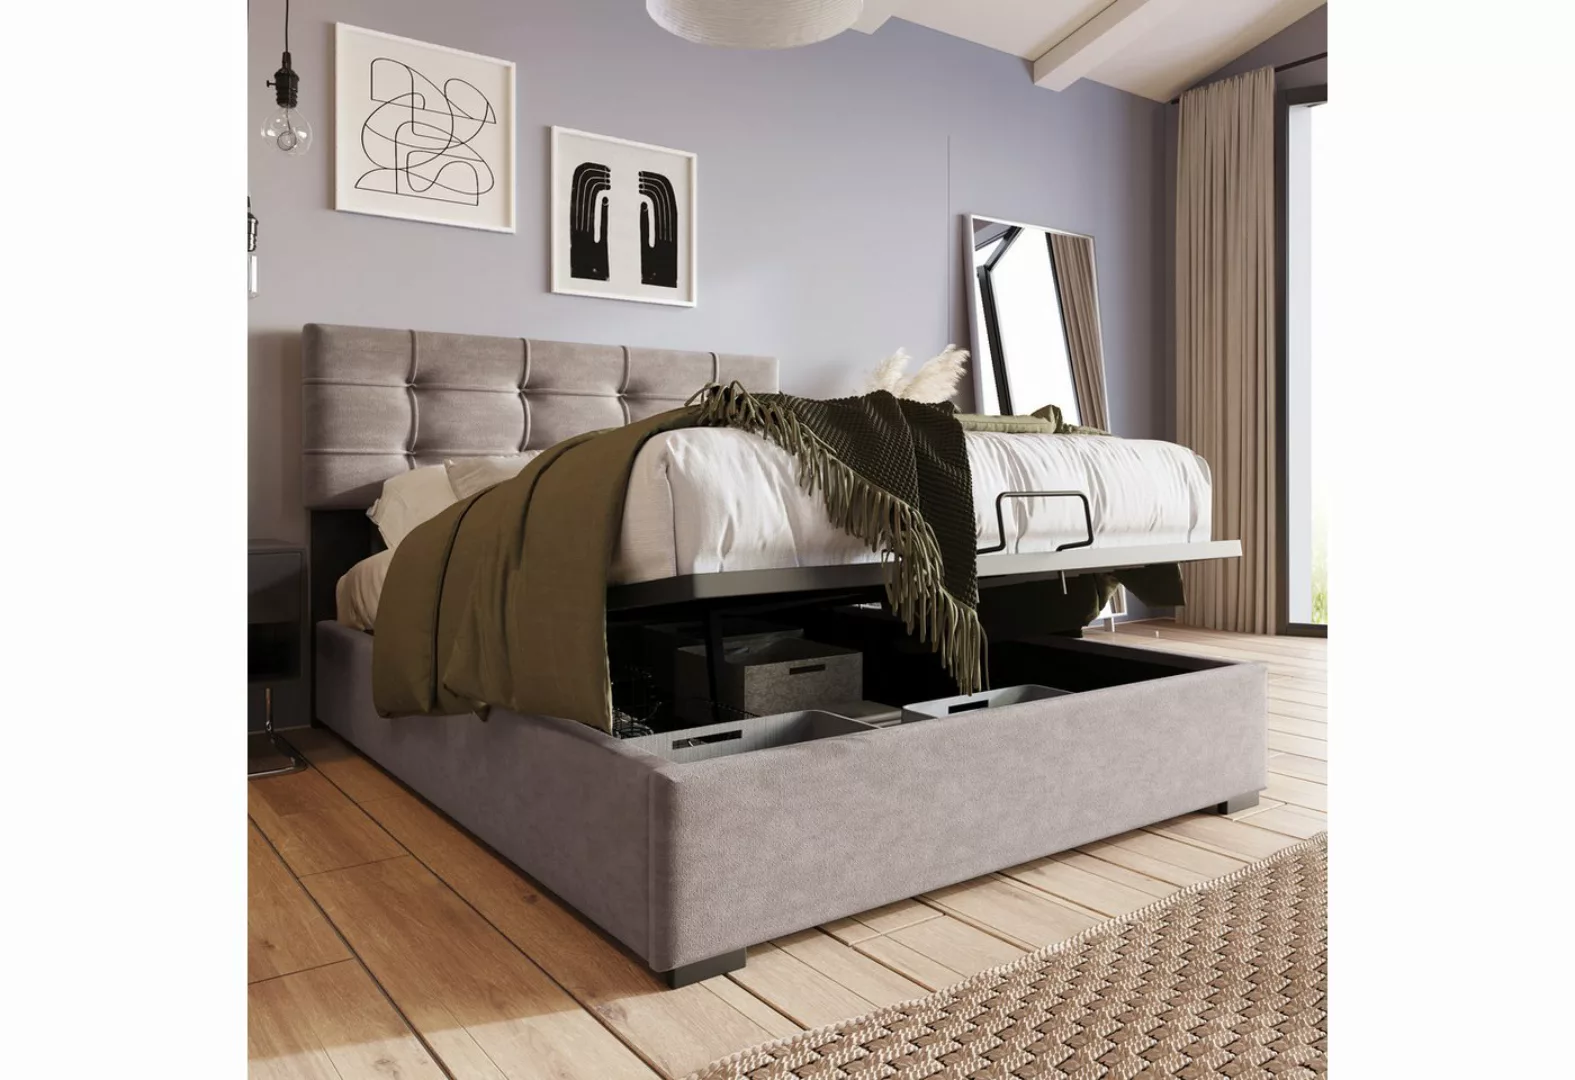 IDEASY Polsterbett Kinderbett, Jugendbett,90x200cm,140x200cm,Verstellbares günstig online kaufen